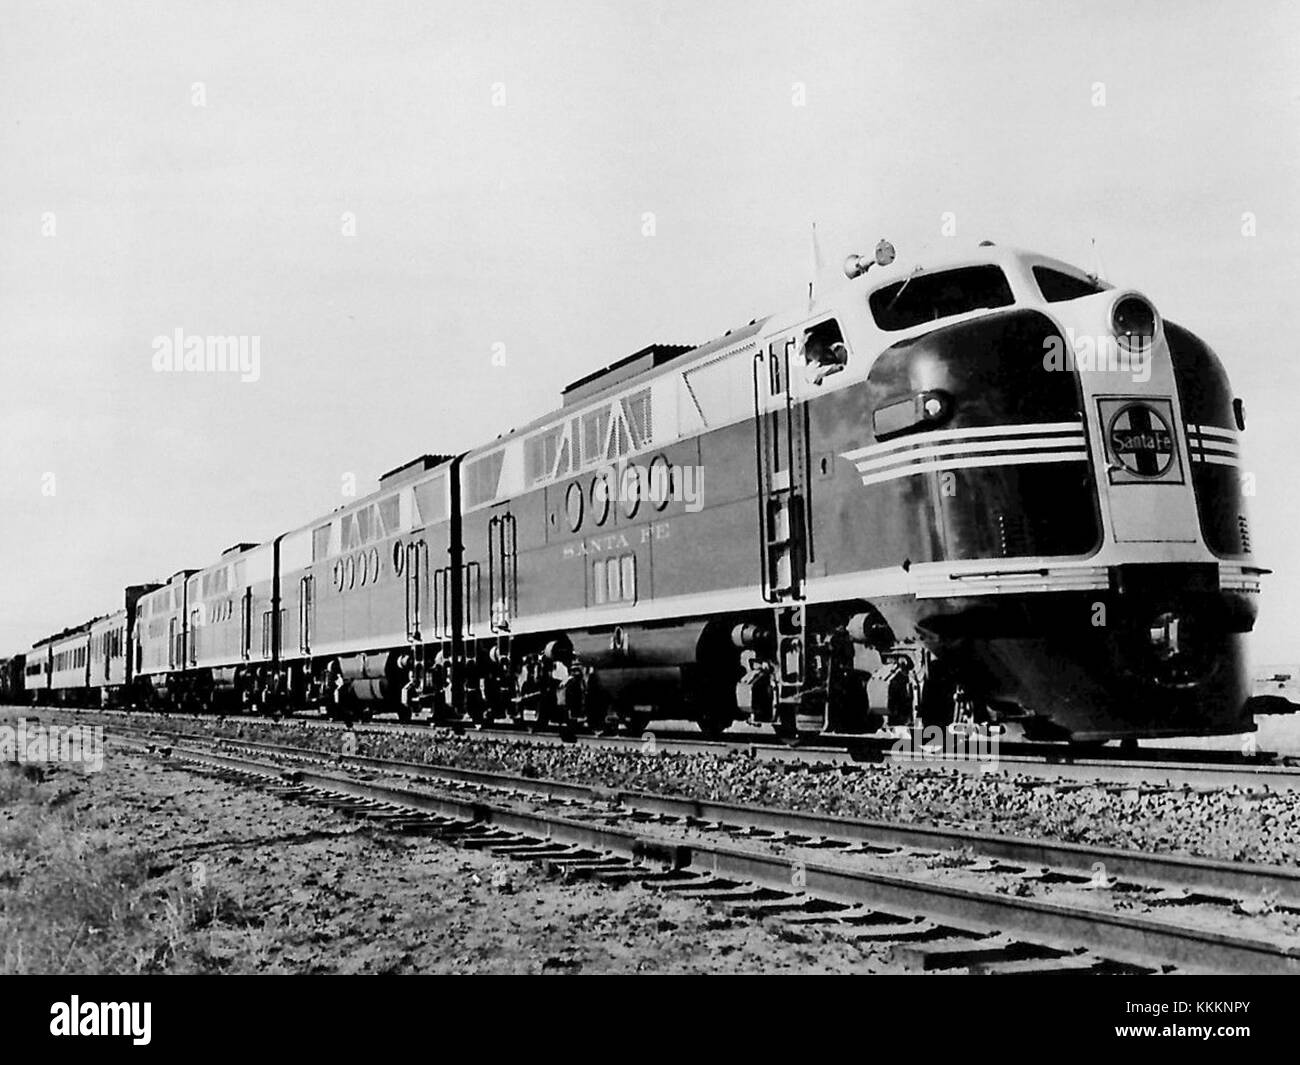 Santa Fe FT locomotive 1941 Stock Photo - Alamy